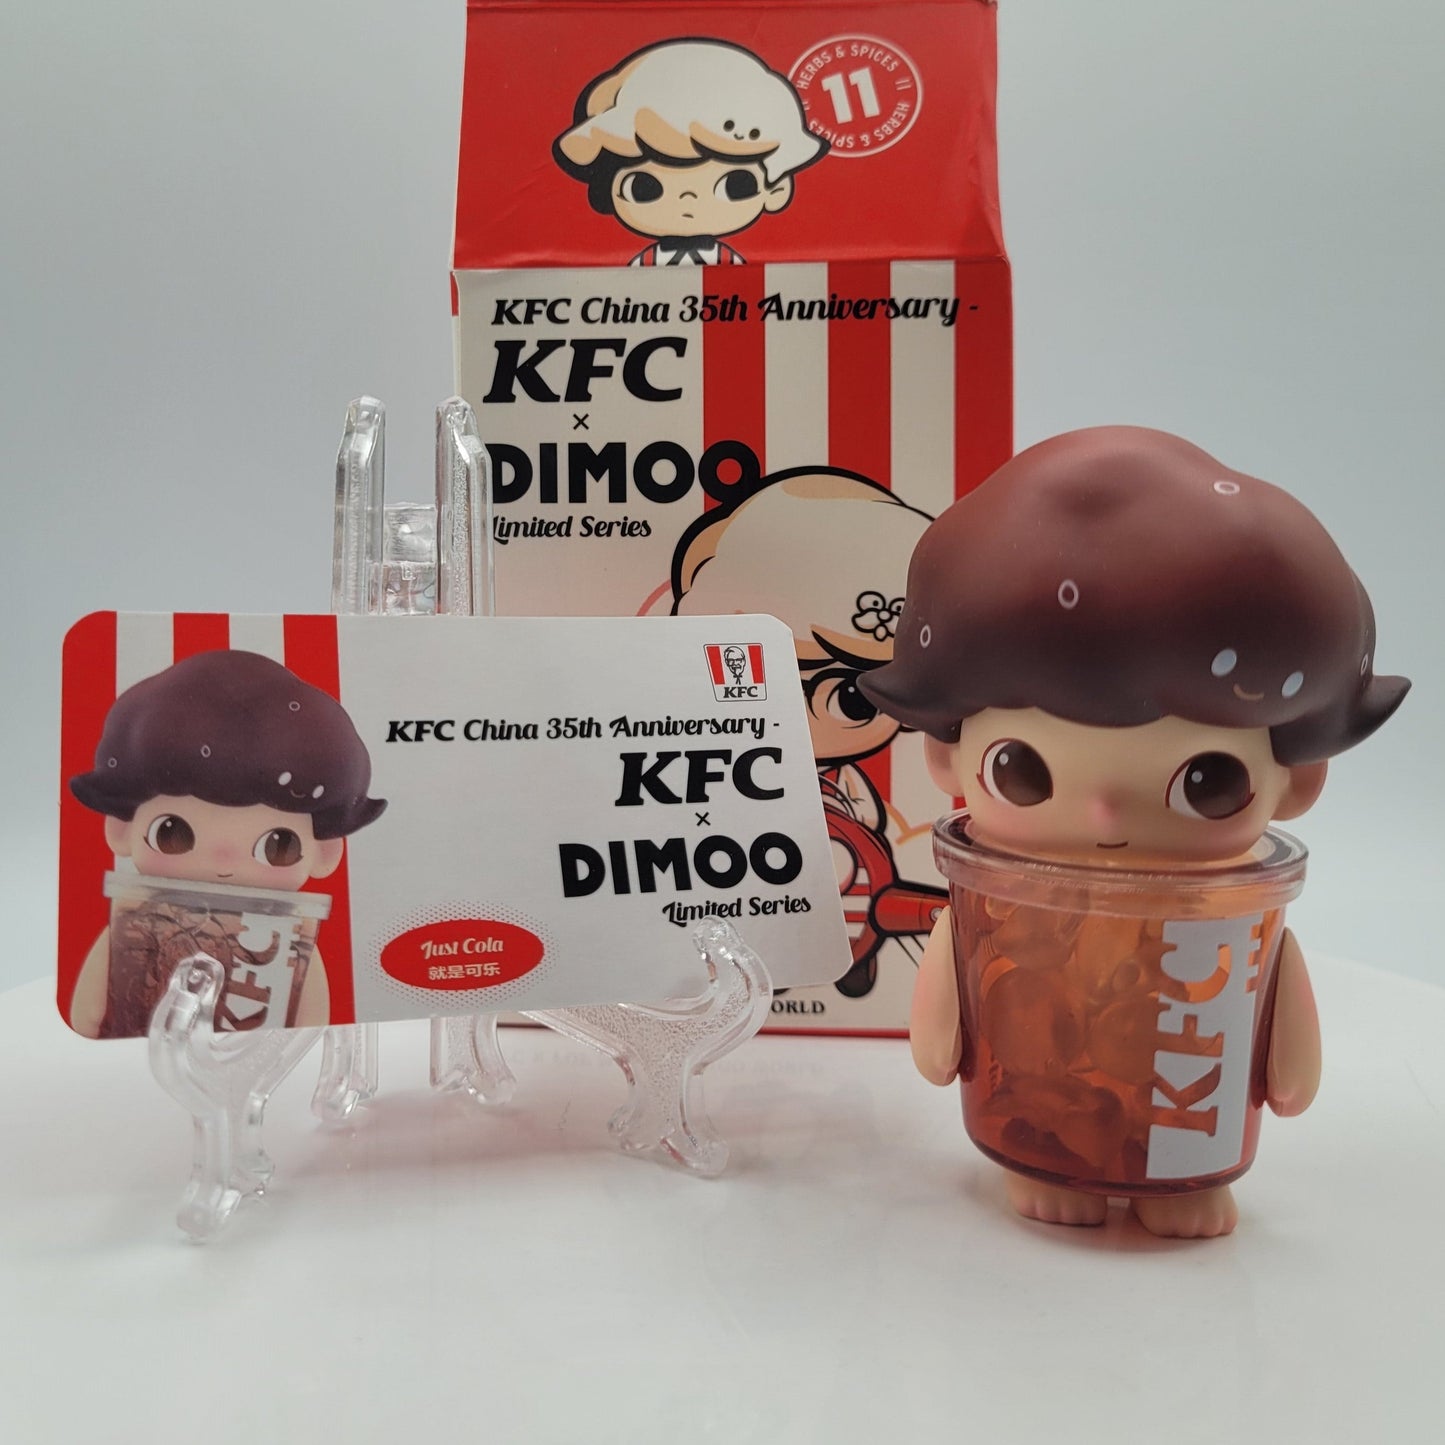 POPMART Dimoo x KFC China 35th Anniversary LIMITED series "Just Cola"